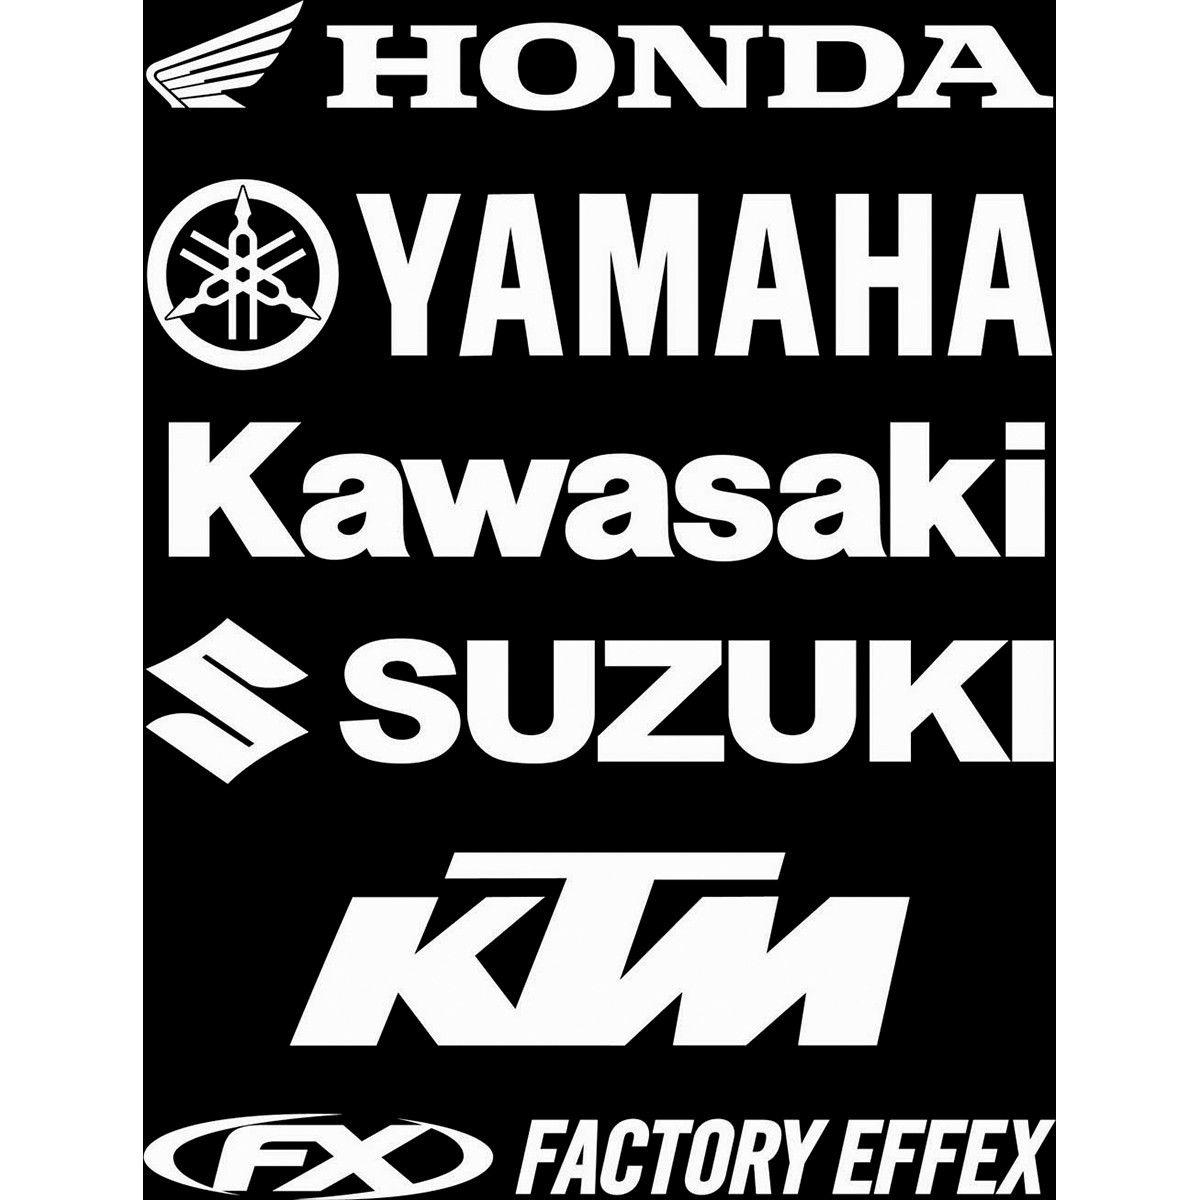 Black Kawasaki Logo - Factory Effex Die Cut Sticker. Logo